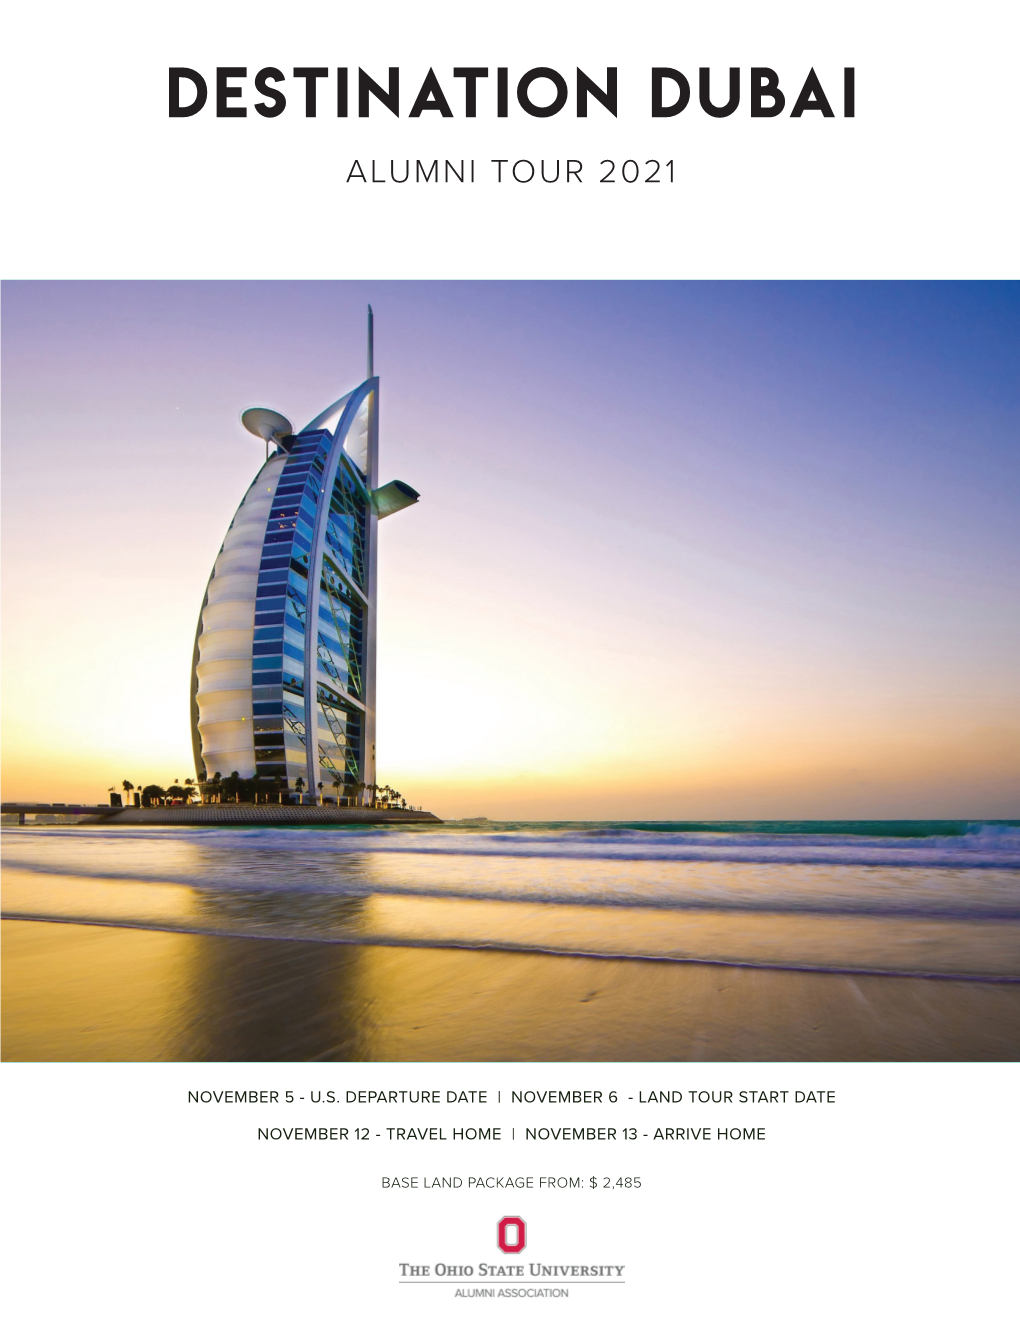 Destination Dubai Alumni Tour 2021